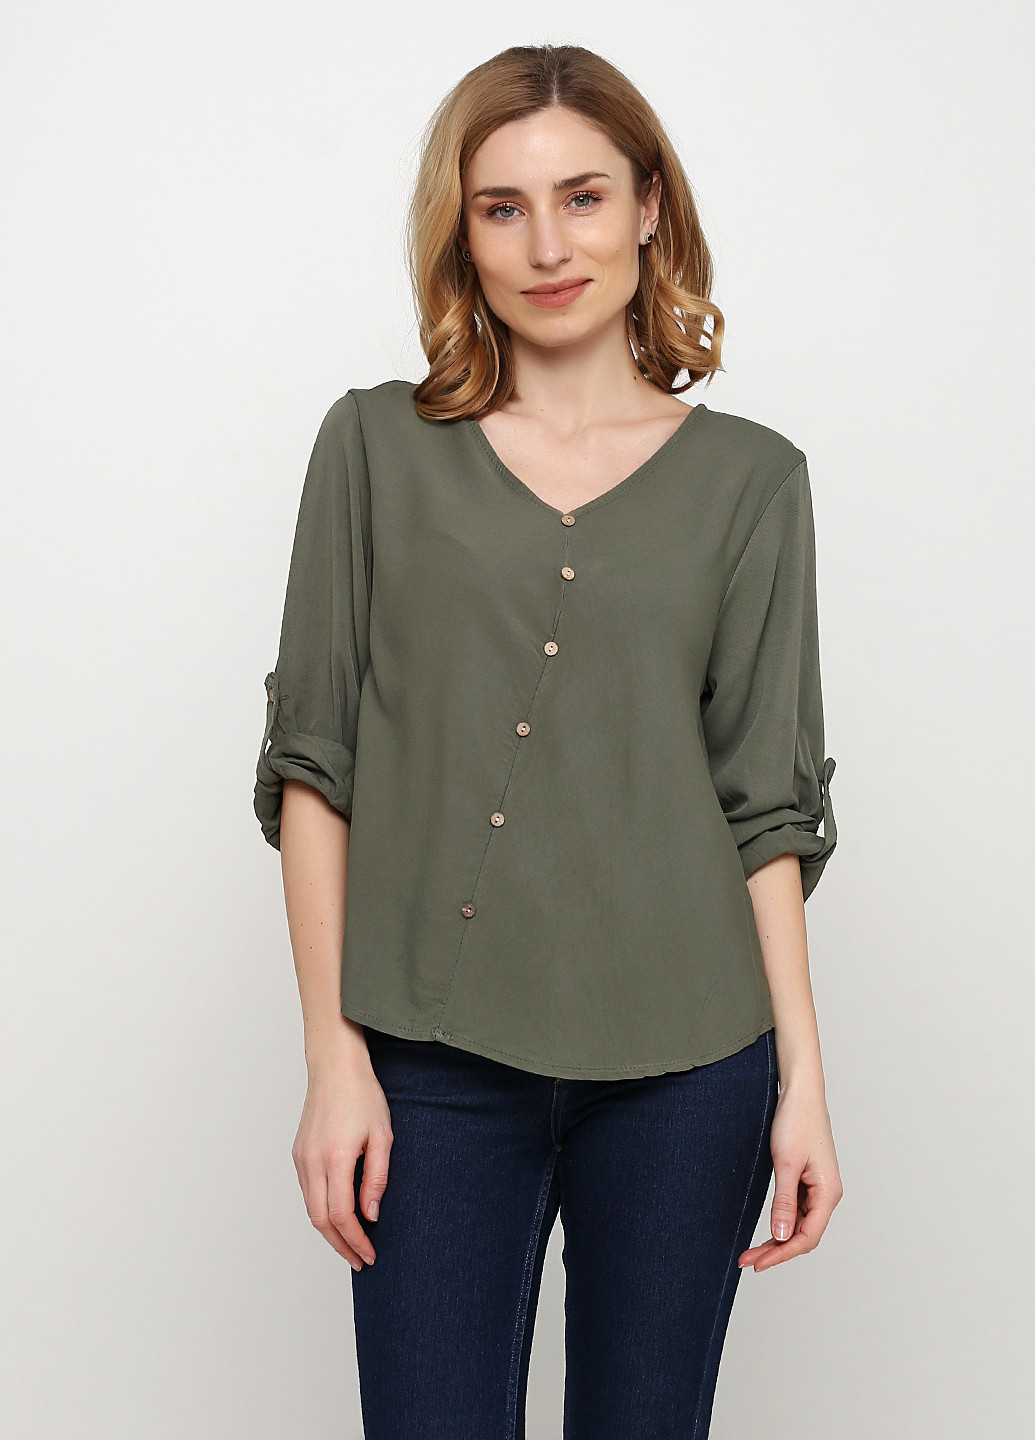 Сіро-зелена демісезонна блуза Made in Italy